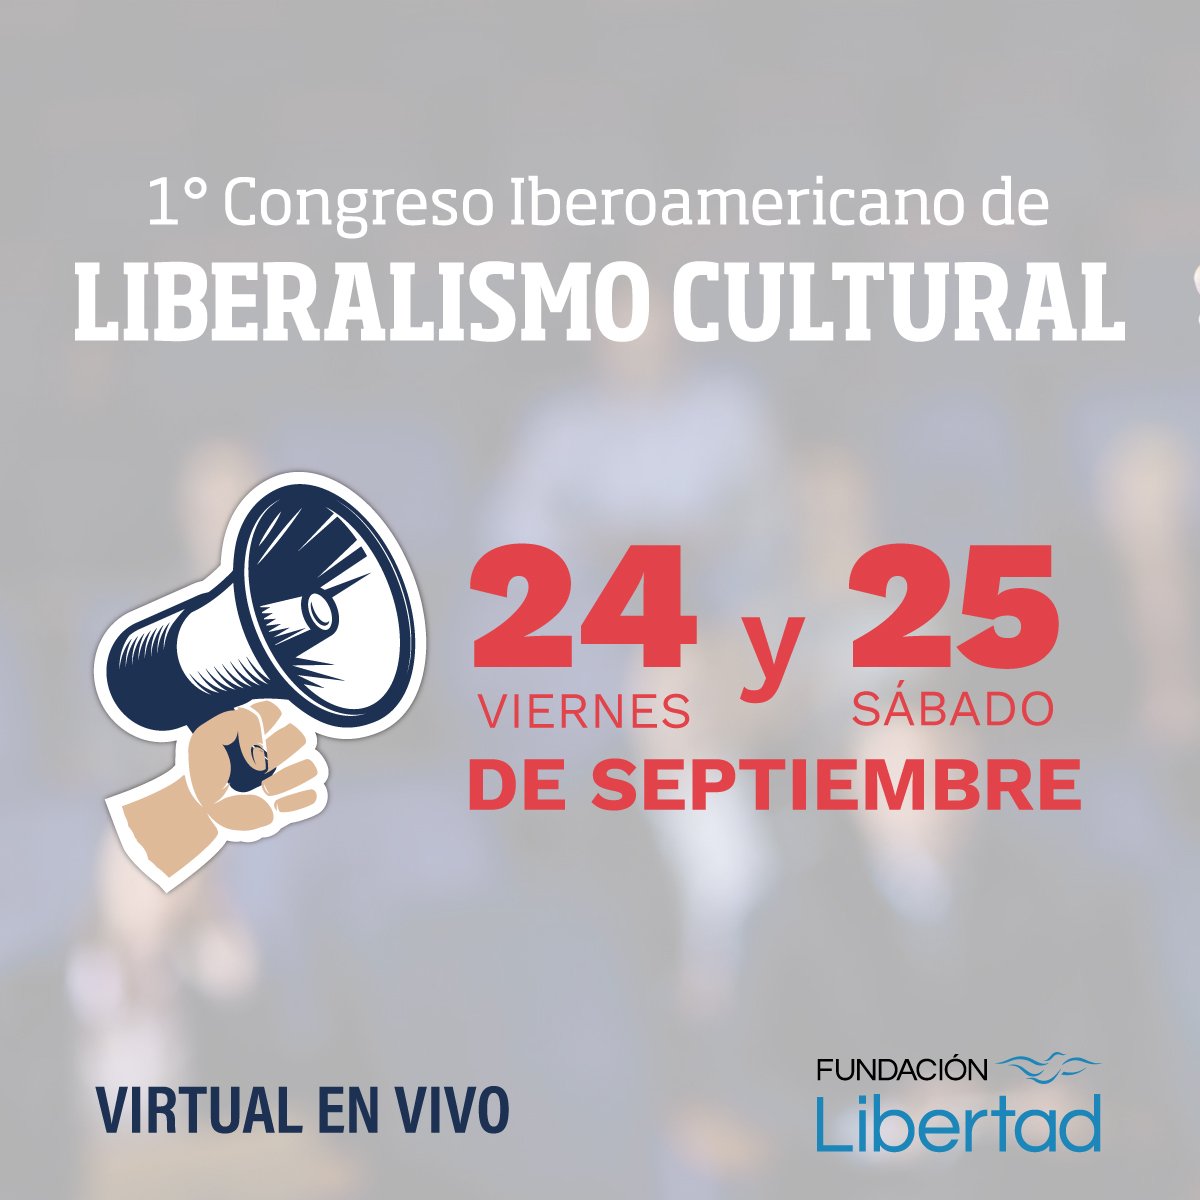 En este momento estás viendo Primer Congreso Iberoamericano de Liberalismo Cultural